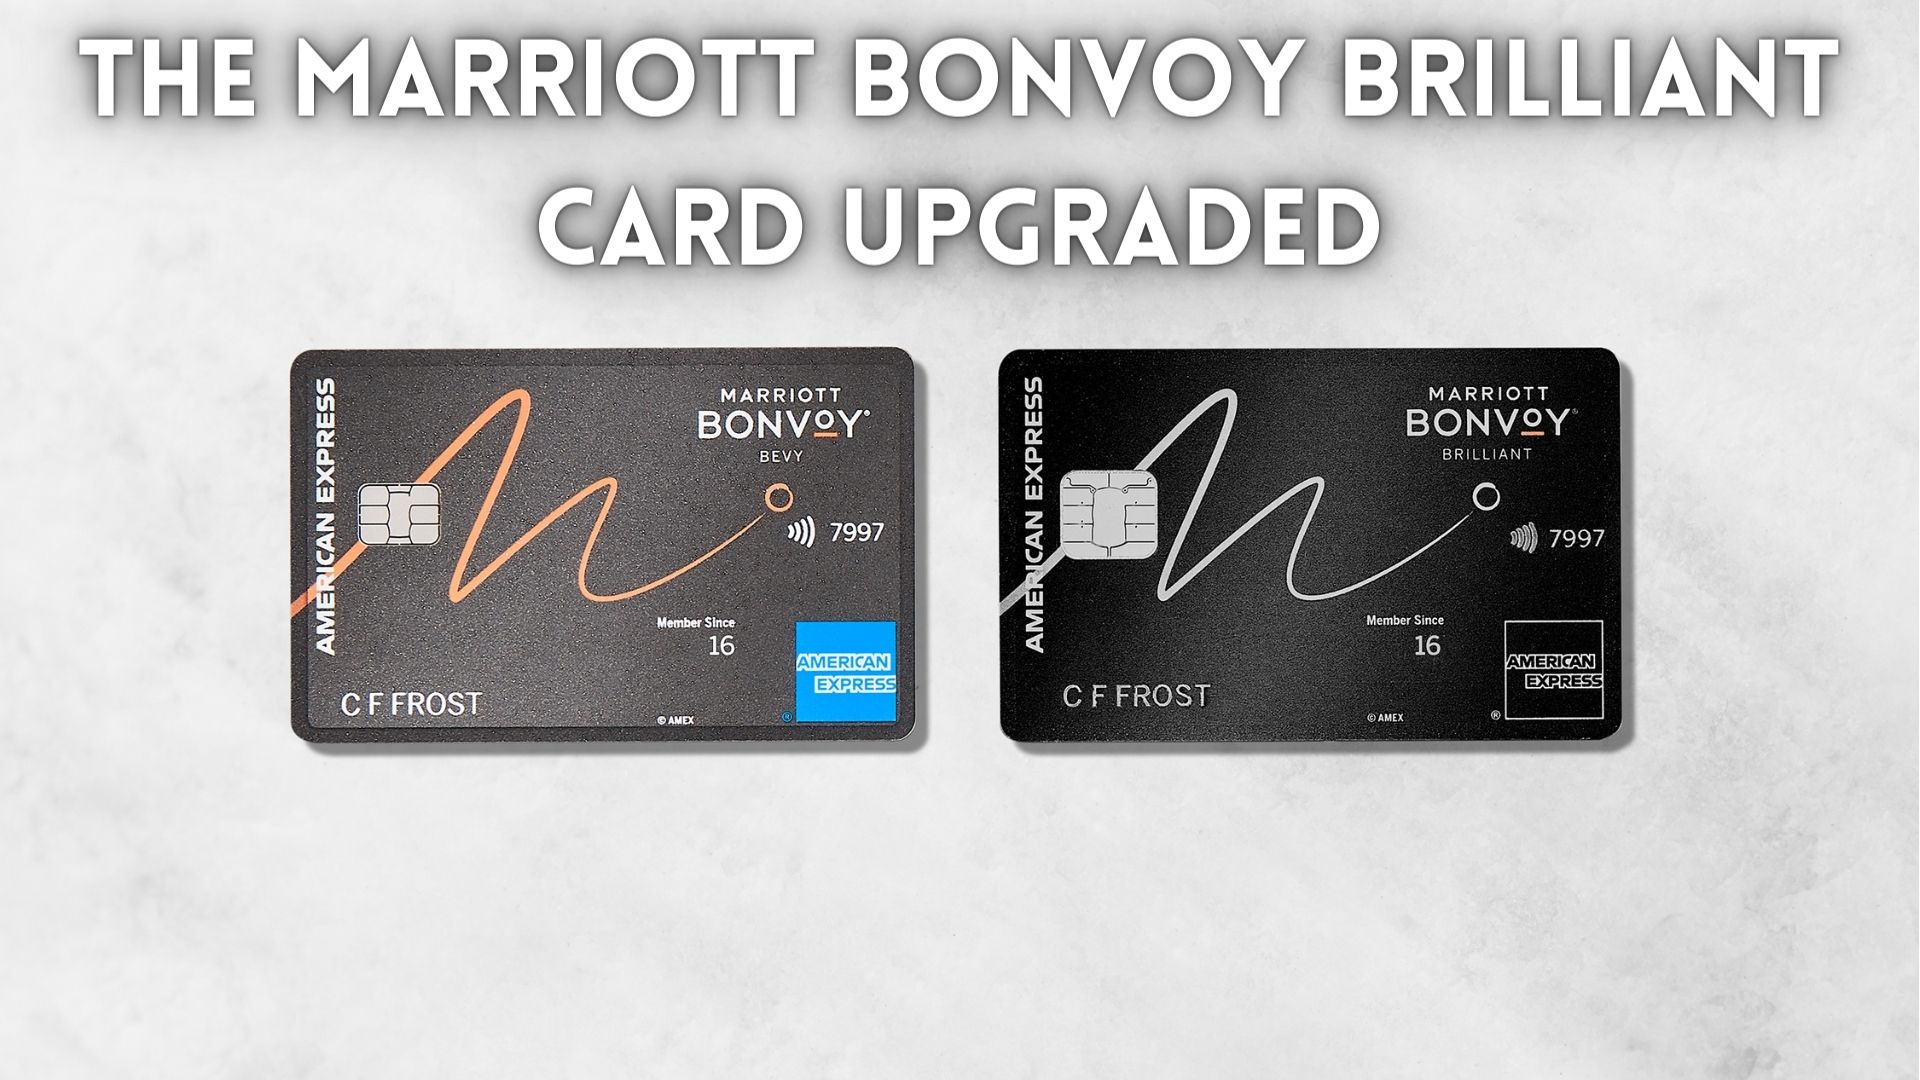 The Marriott Bonvoy Brilliant Card Upgrade.